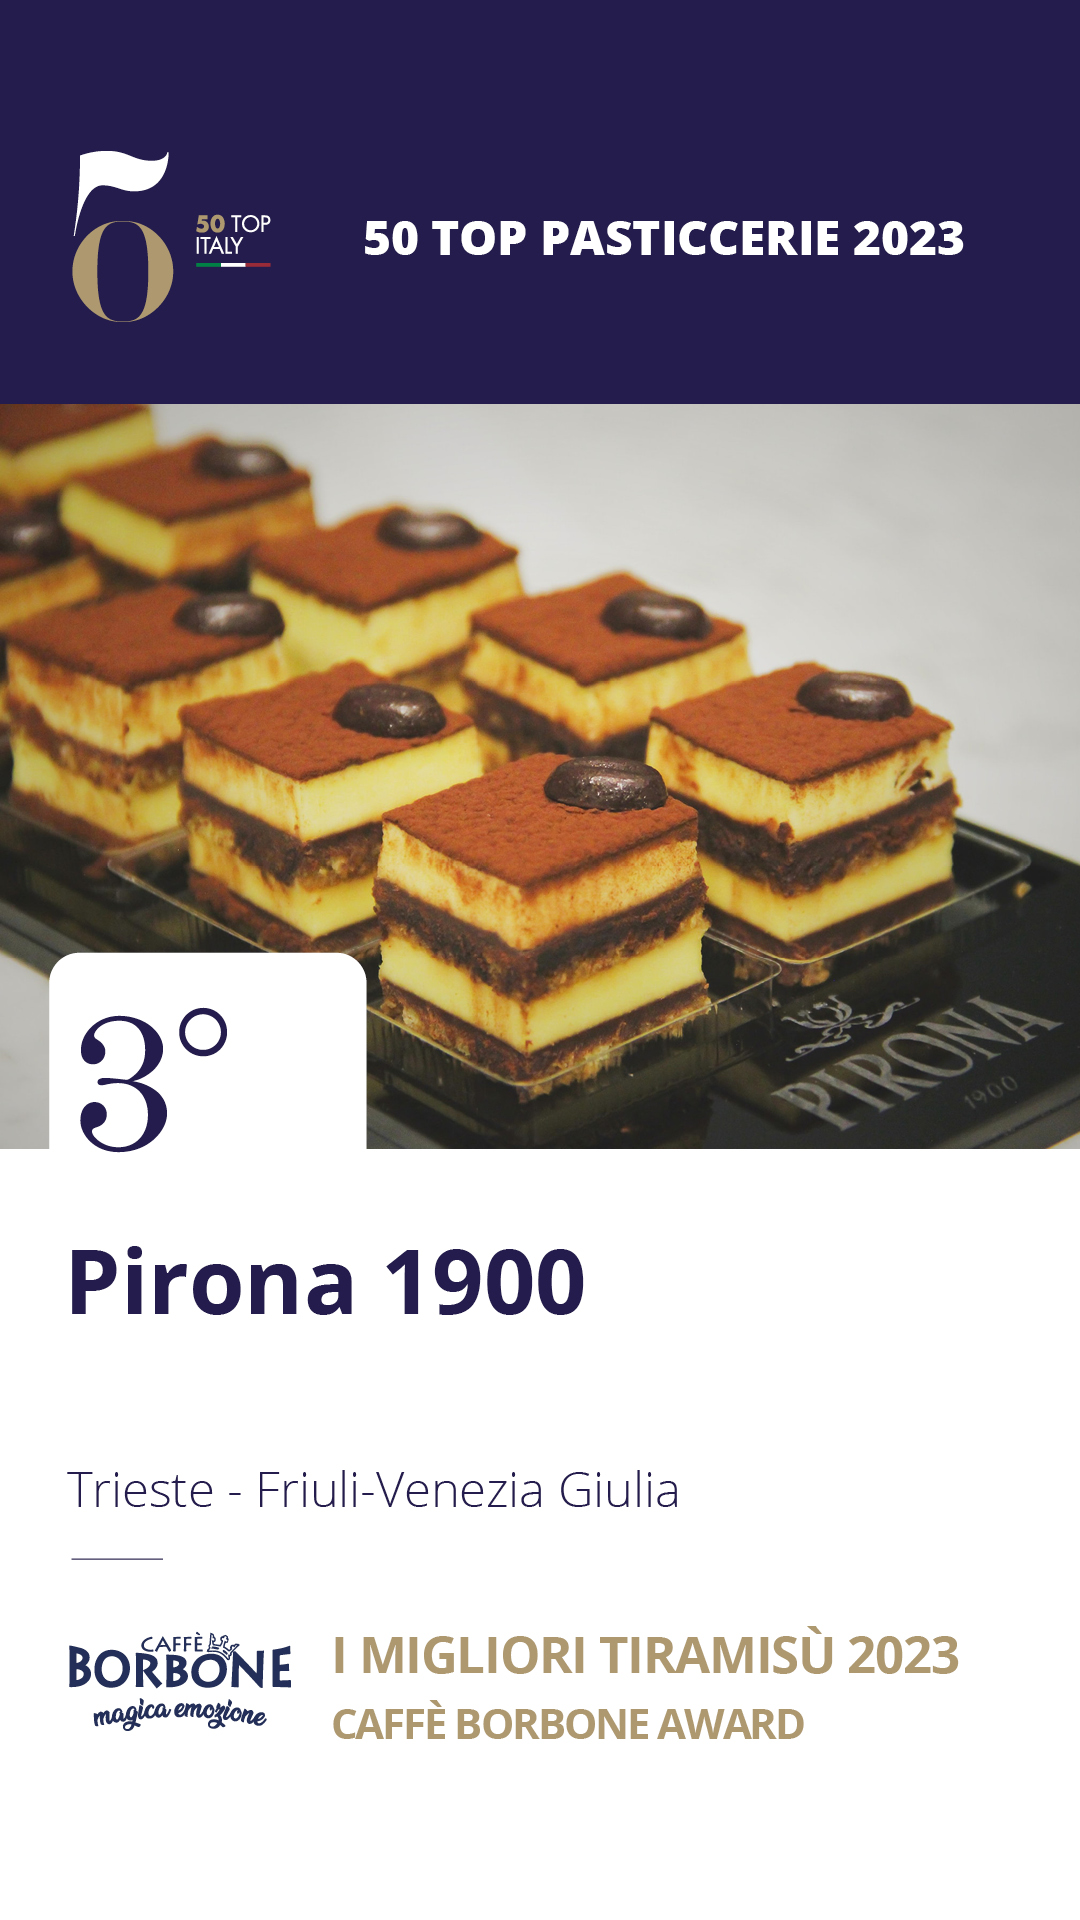 3. Pirona 1900 – Trieste, Friuli-Venezia Giulia